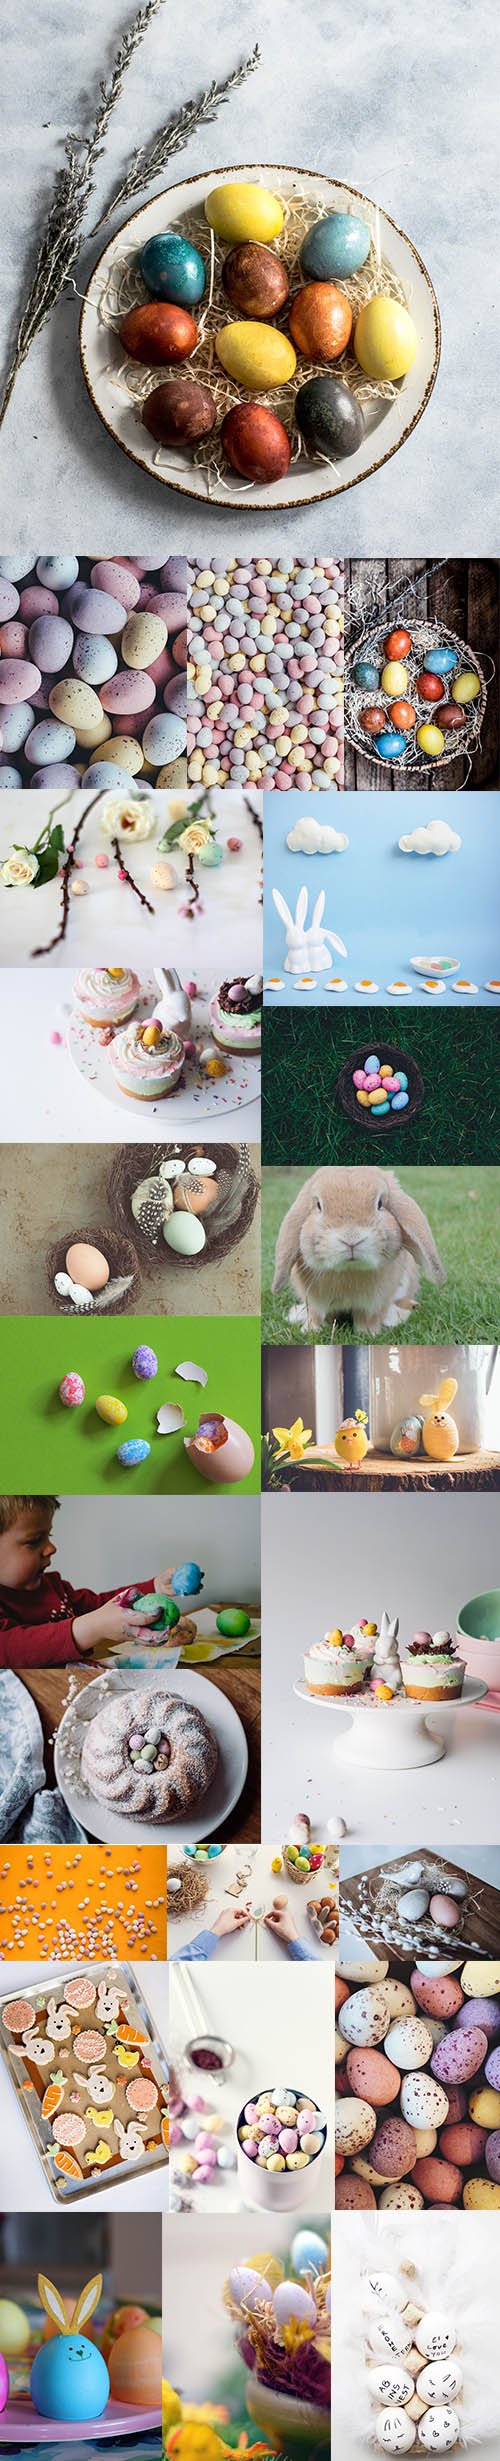 Happy Easter Bundle - UHQ Stock Photo